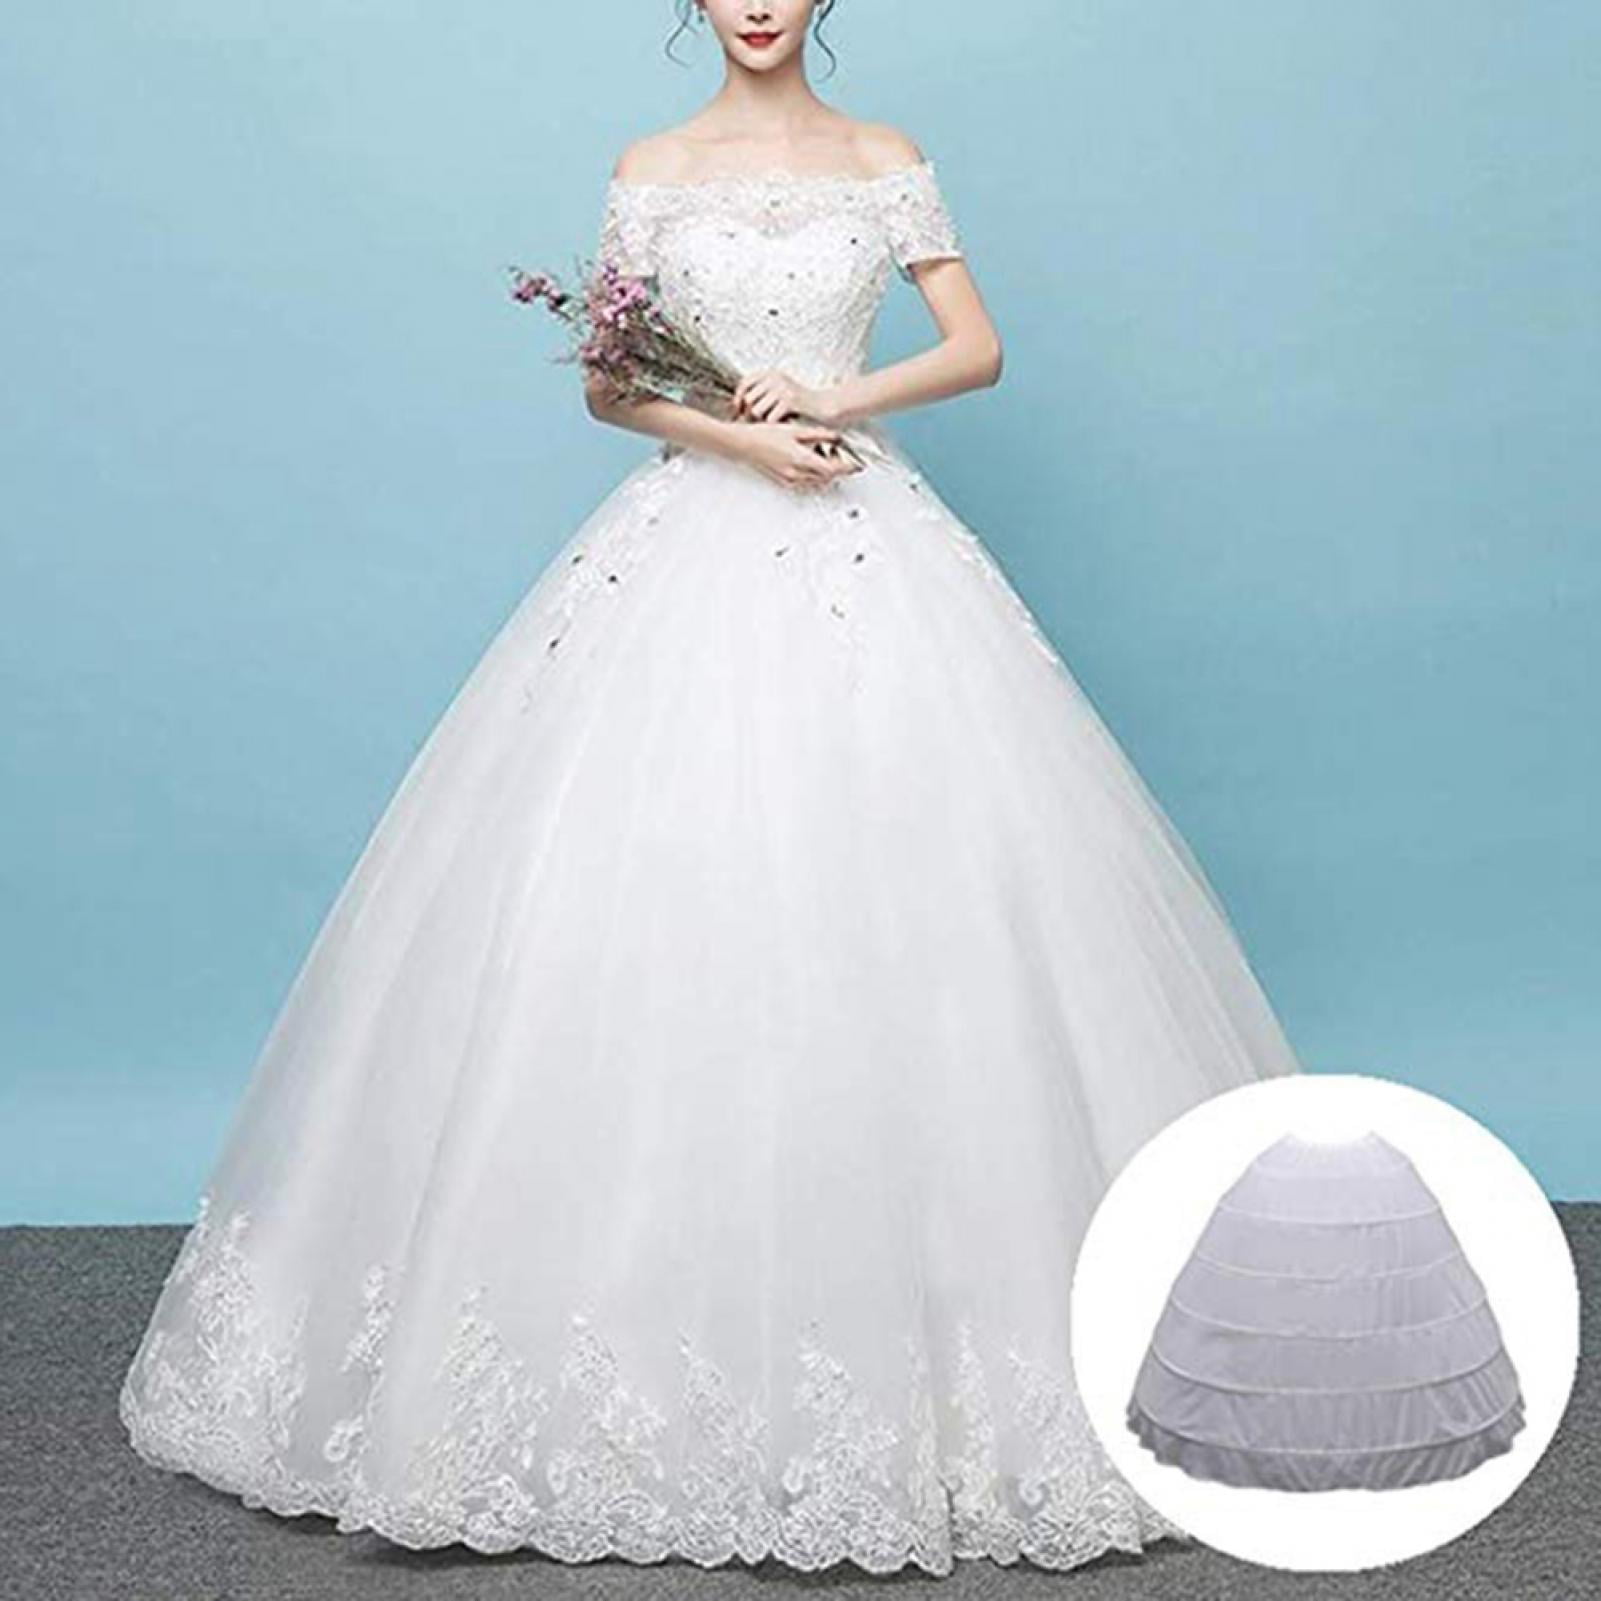 Hoop Long Bridal Wedding Petticoat Crinoline Ball Gown Tutu Skirt Underskirt 